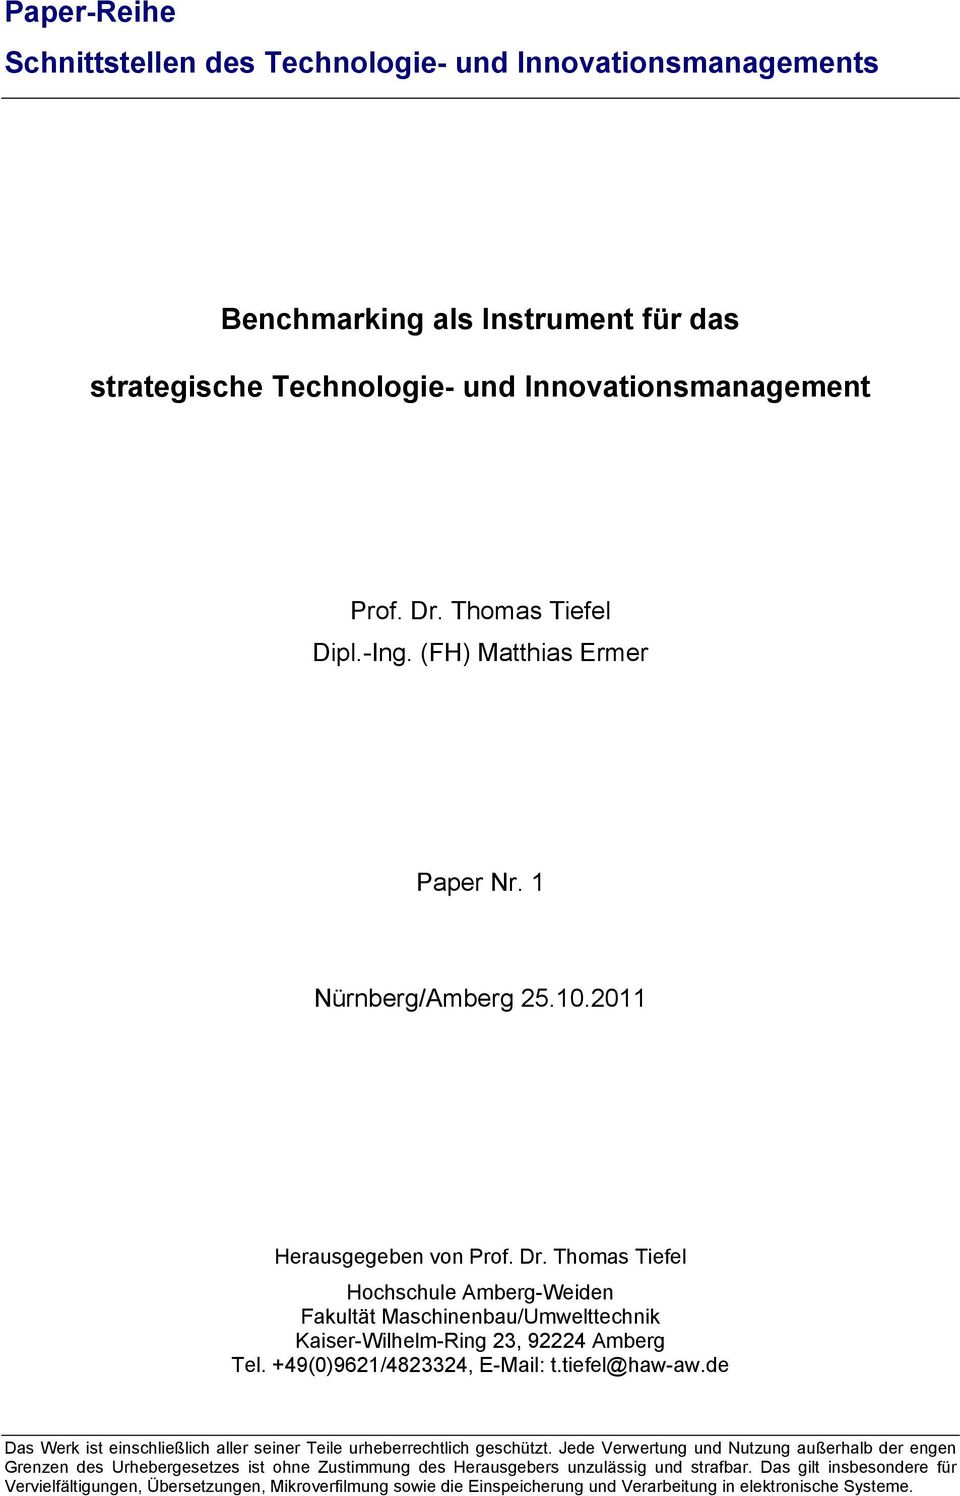 Thomas Tiefel Hochschule Amberg-Weiden Fakultät Maschinenbau/Umwelttechnik Kaiser-Wilhelm-Ring 23, 92224 Amberg Tel. +49(0)9621/4823324, E-Mail: t.tiefel@haw-aw.